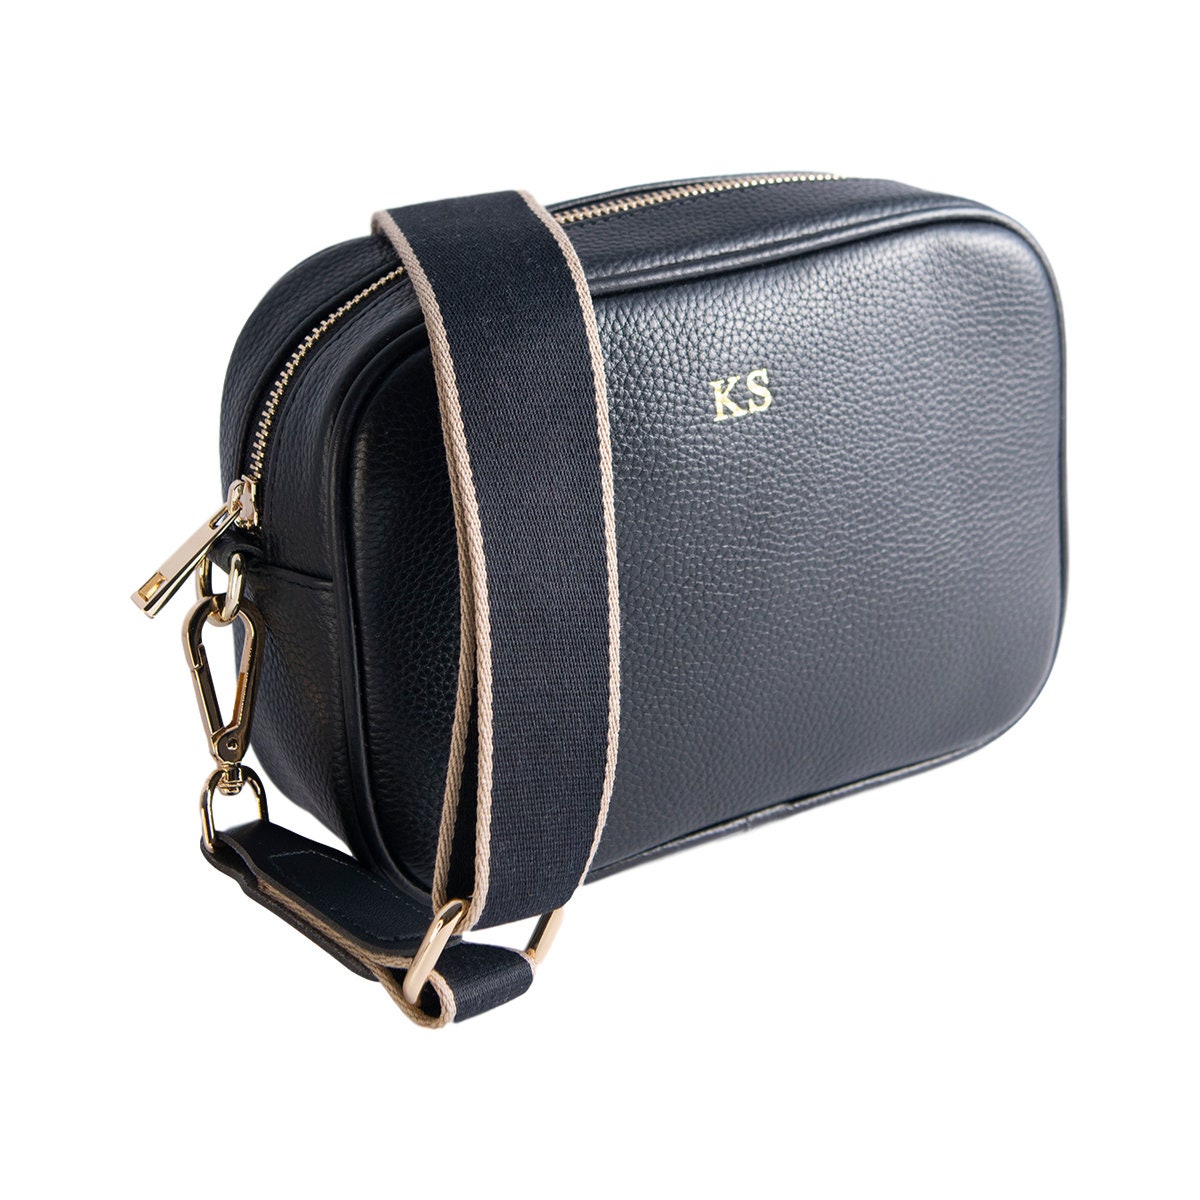 Help me choose a small black bag? Looking for something elegant but  versatile… : r/Louisvuitton